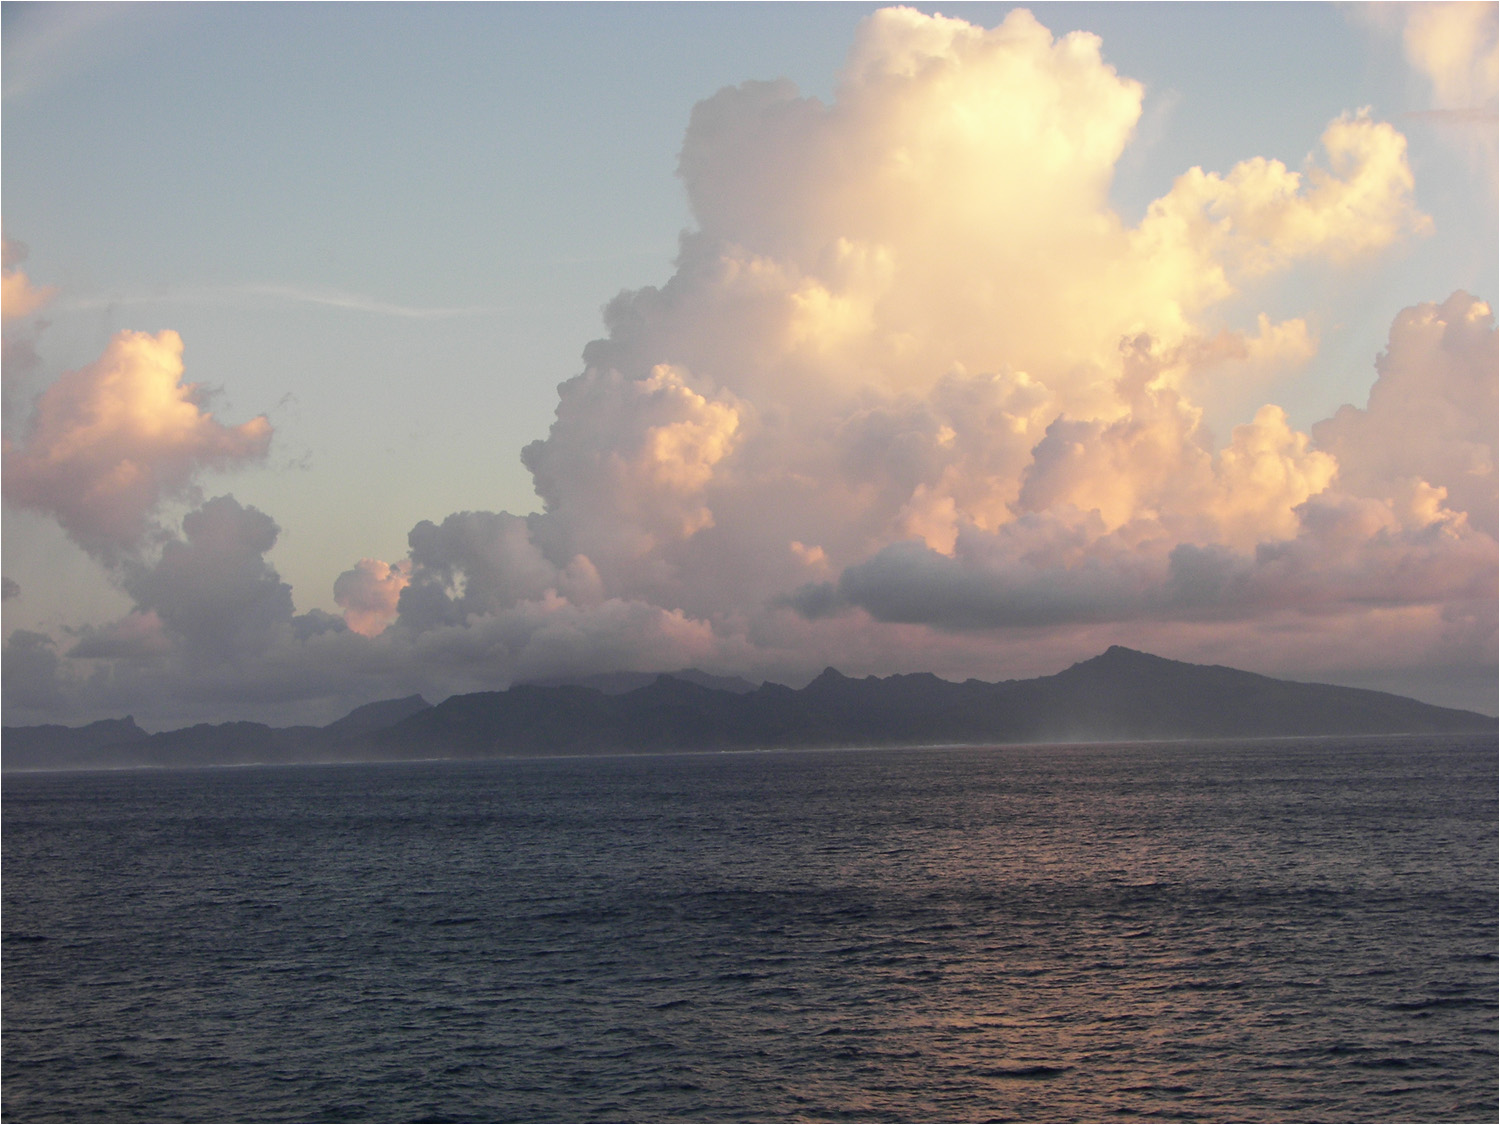 An early morning view of the island of Raiatea.